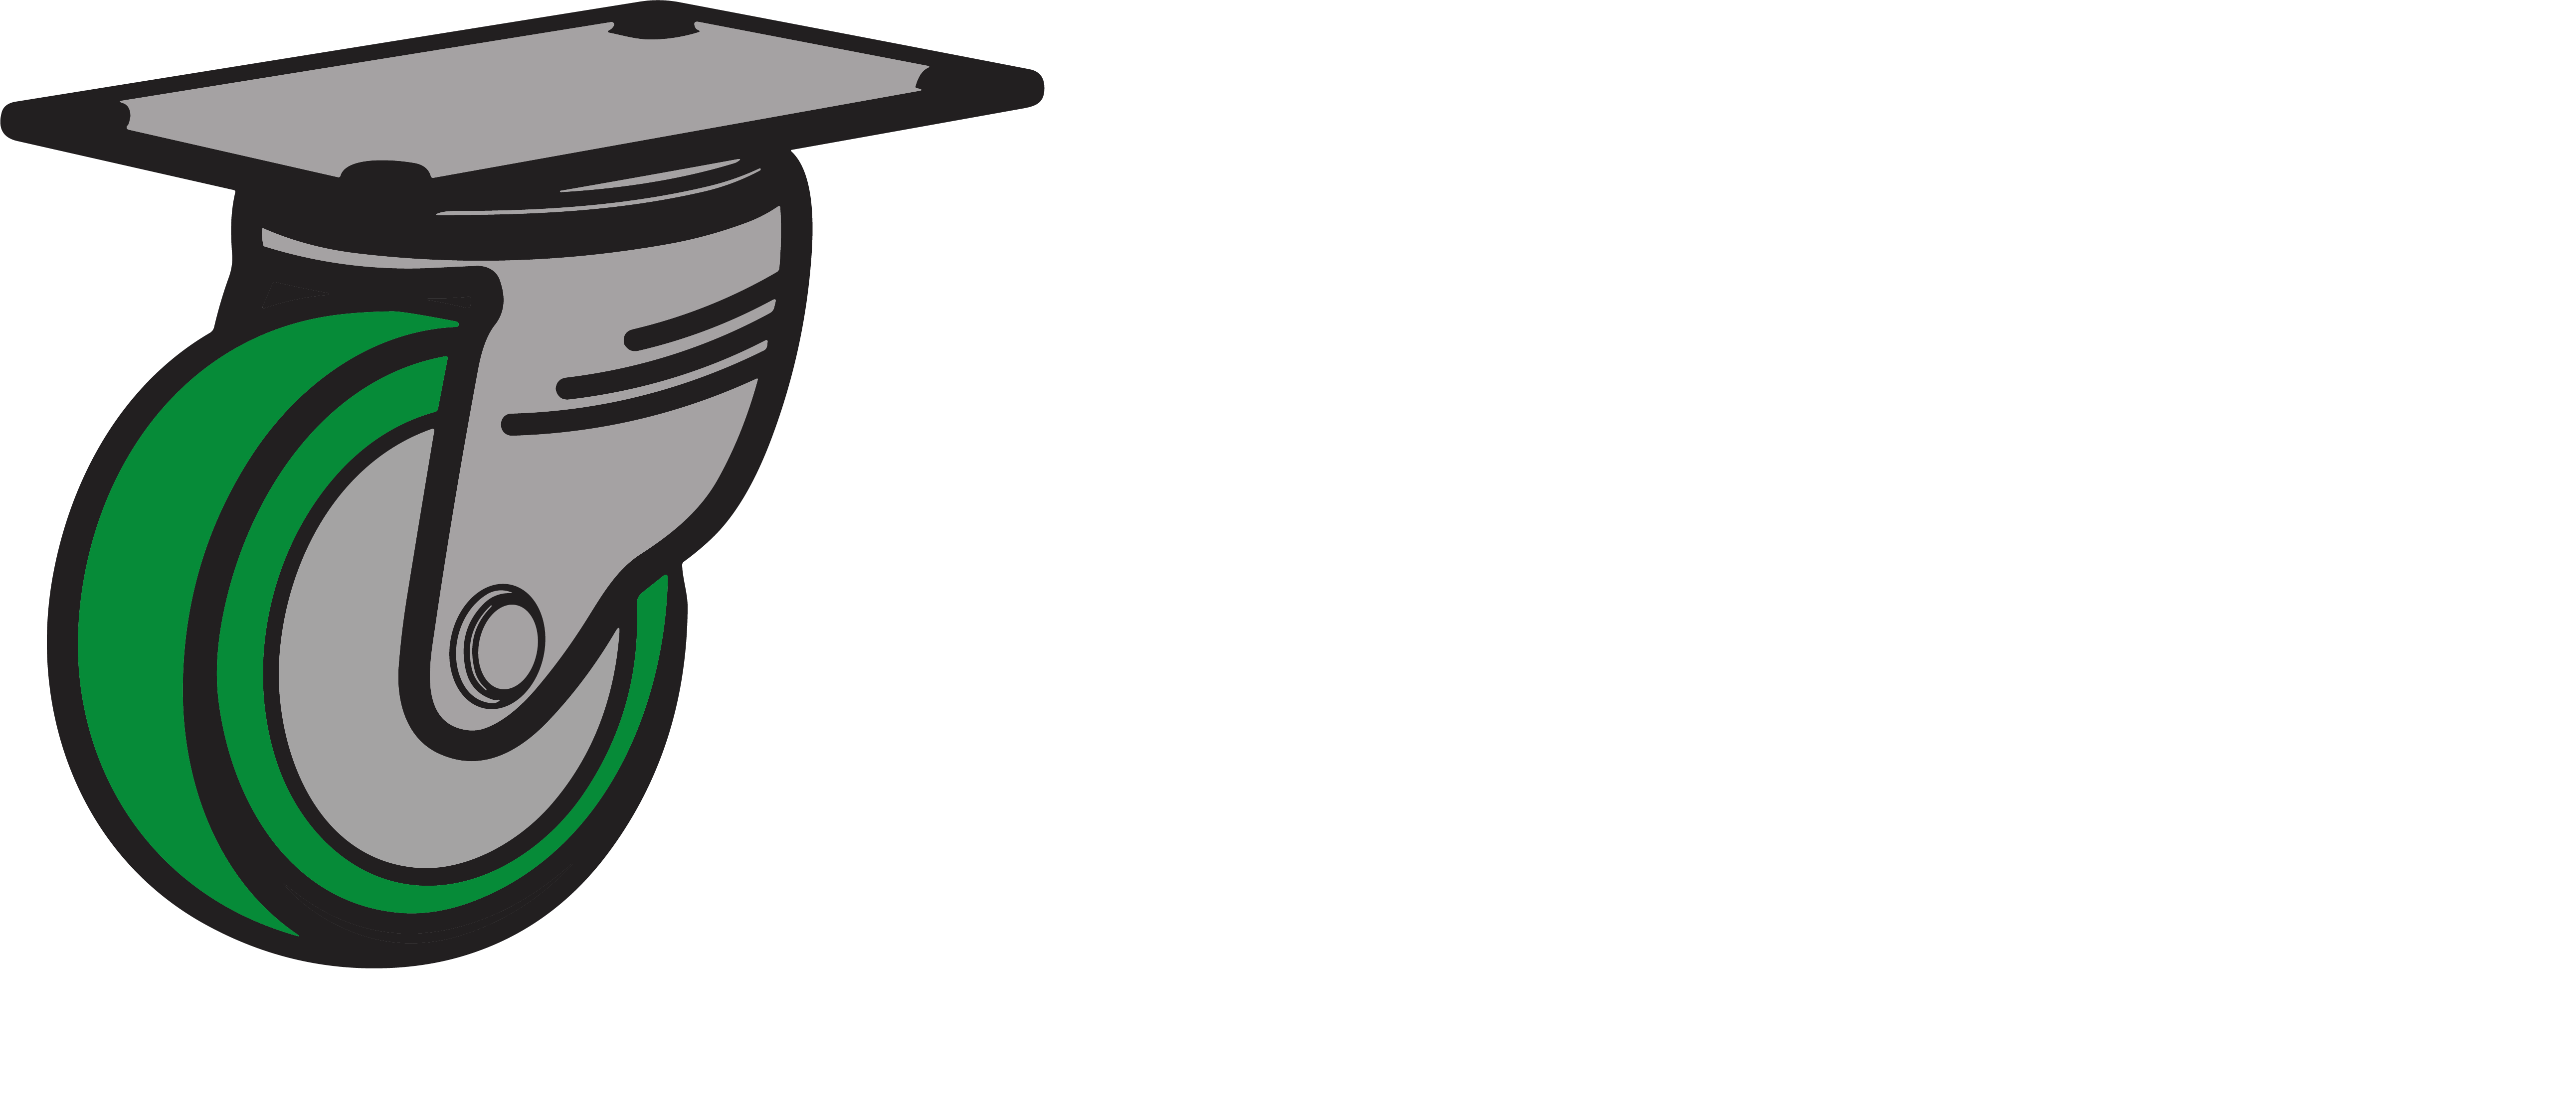 Logo Ruedas Guifer